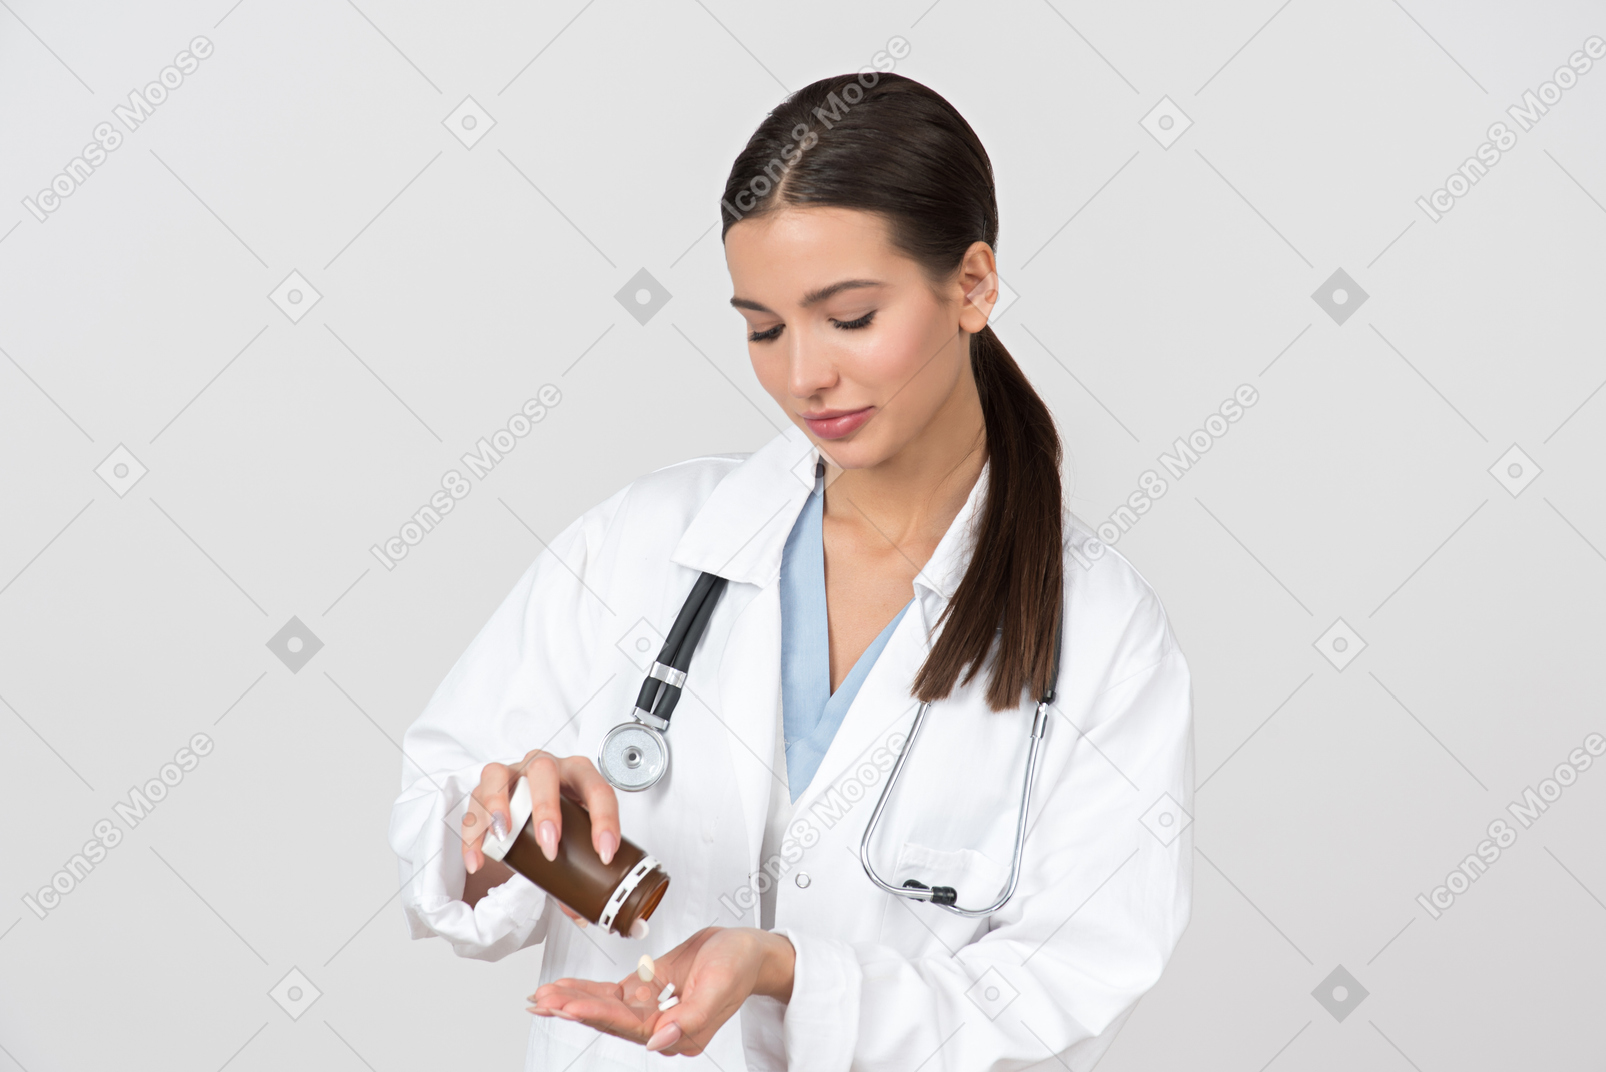 Checking medicine before prescribing it